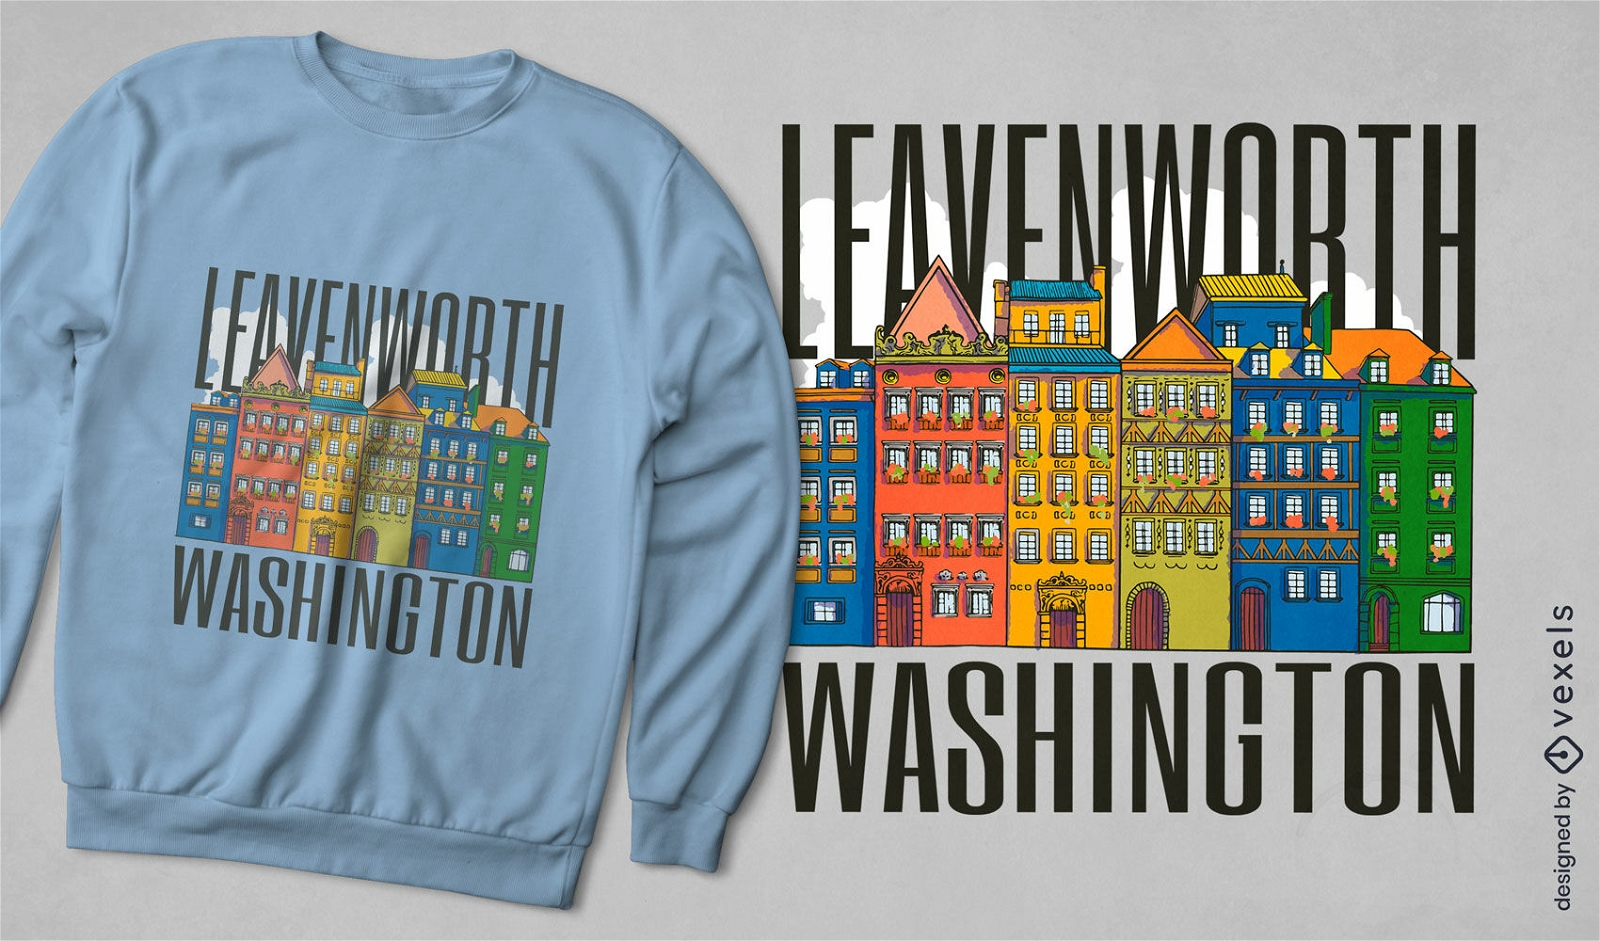 Leavenworth Washington T-Shirt-Design